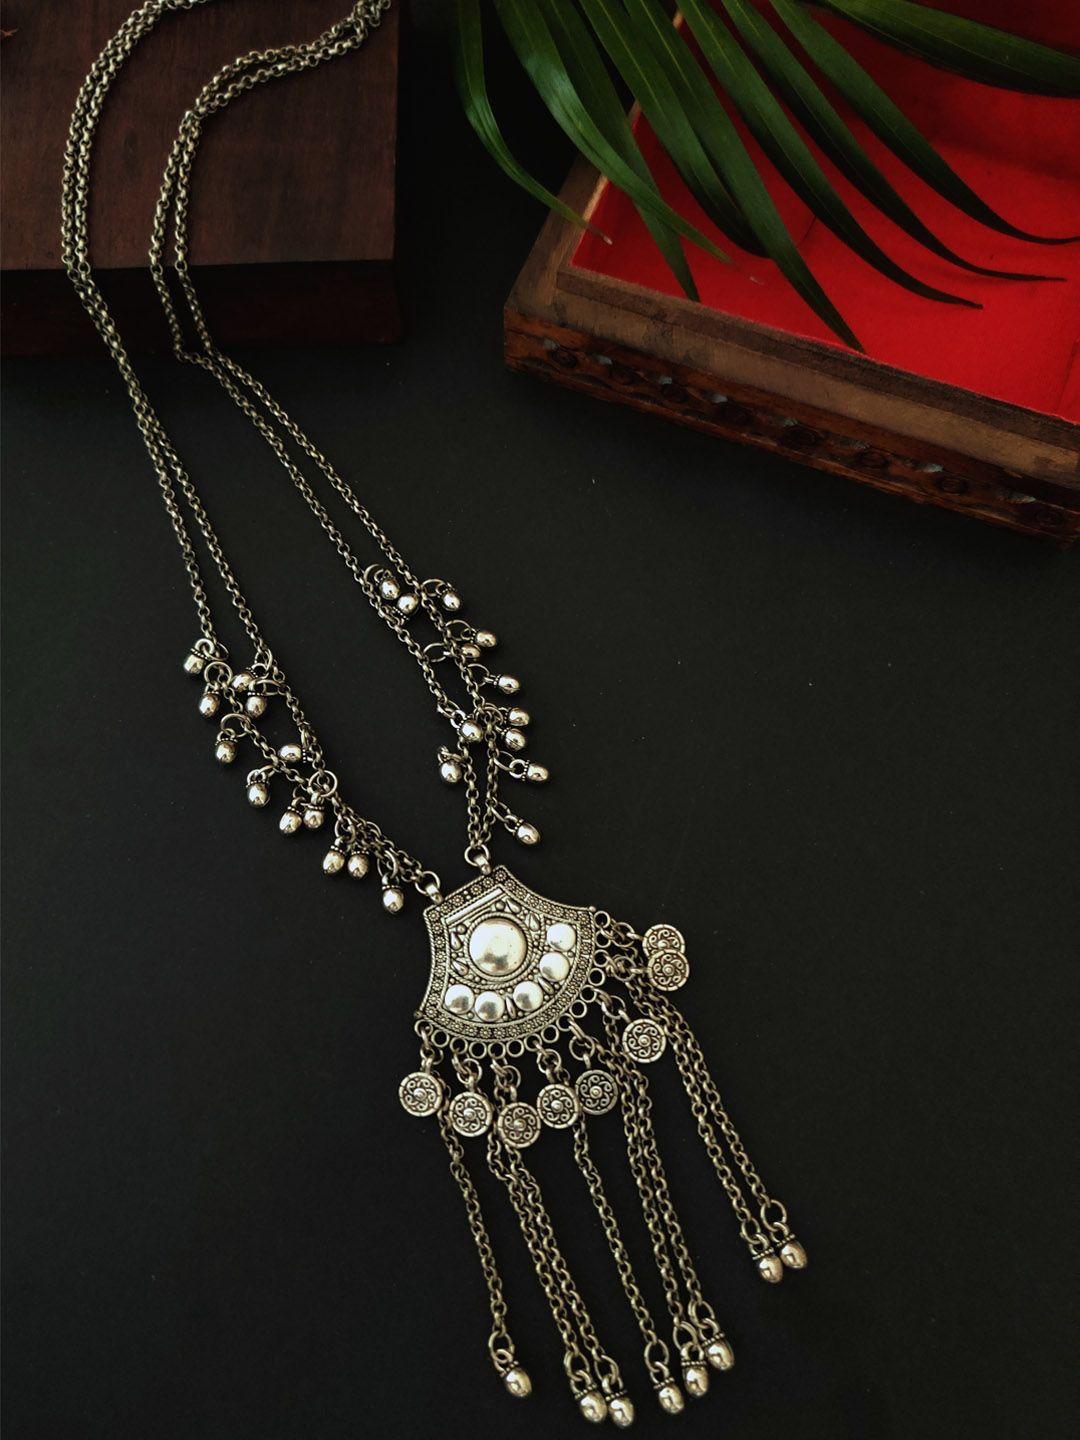 binni's wardrobe silver-toned silver plated necklace